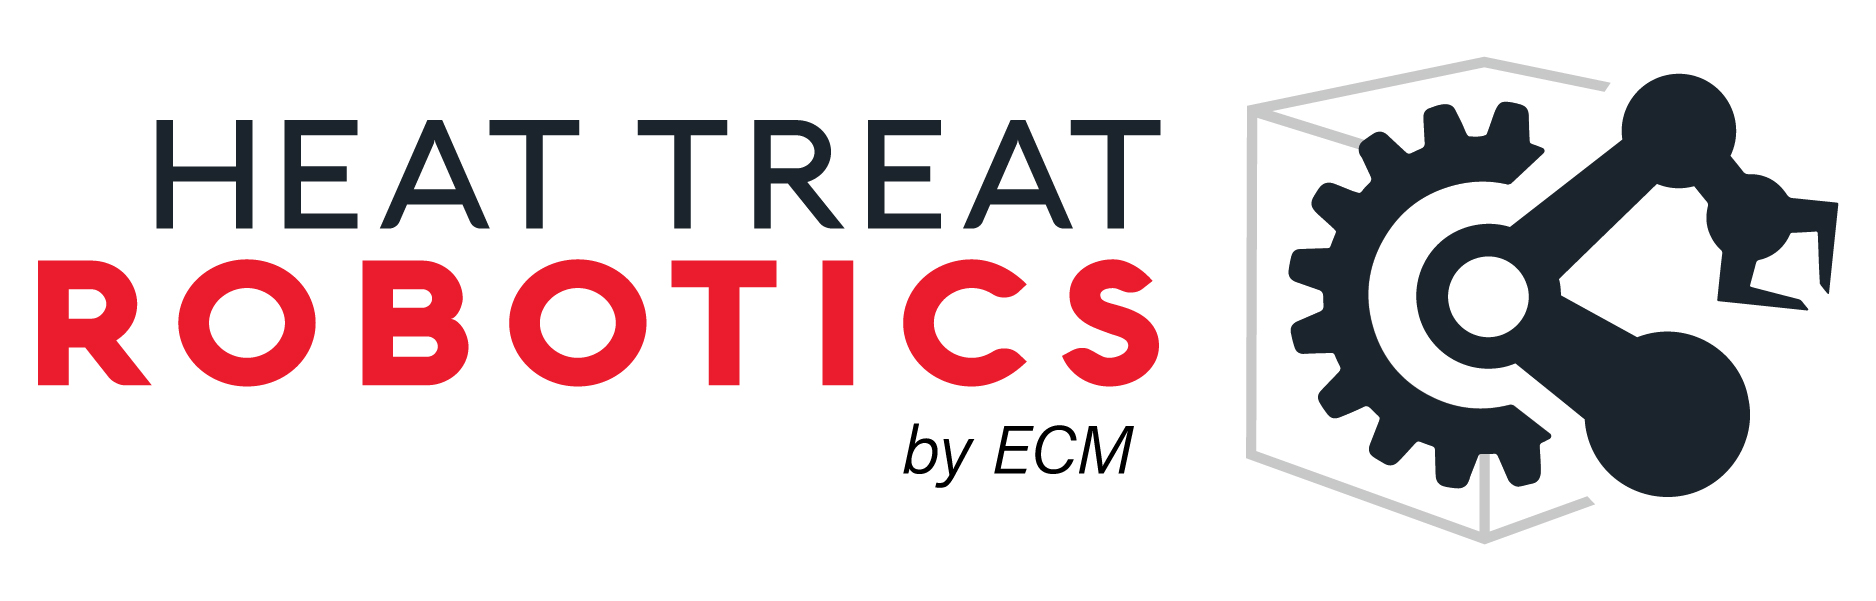 HeatTreatRobotics-byECM_Logo-03